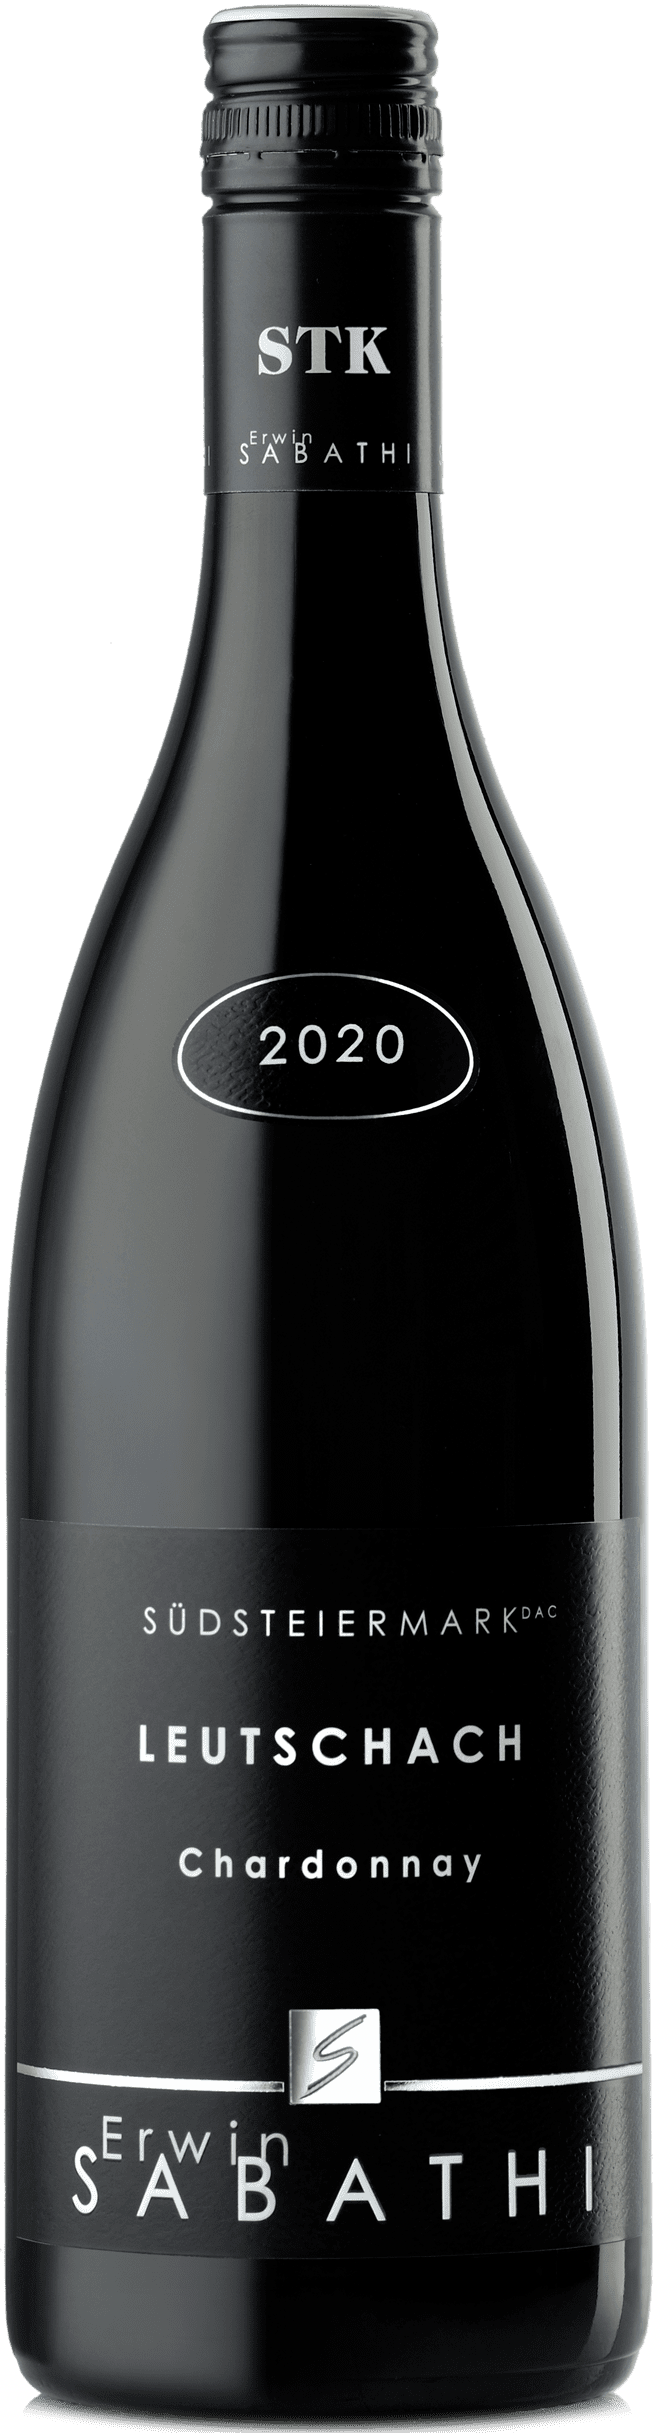 Erwin Sabathi Leutschacher Chardonnay 2021